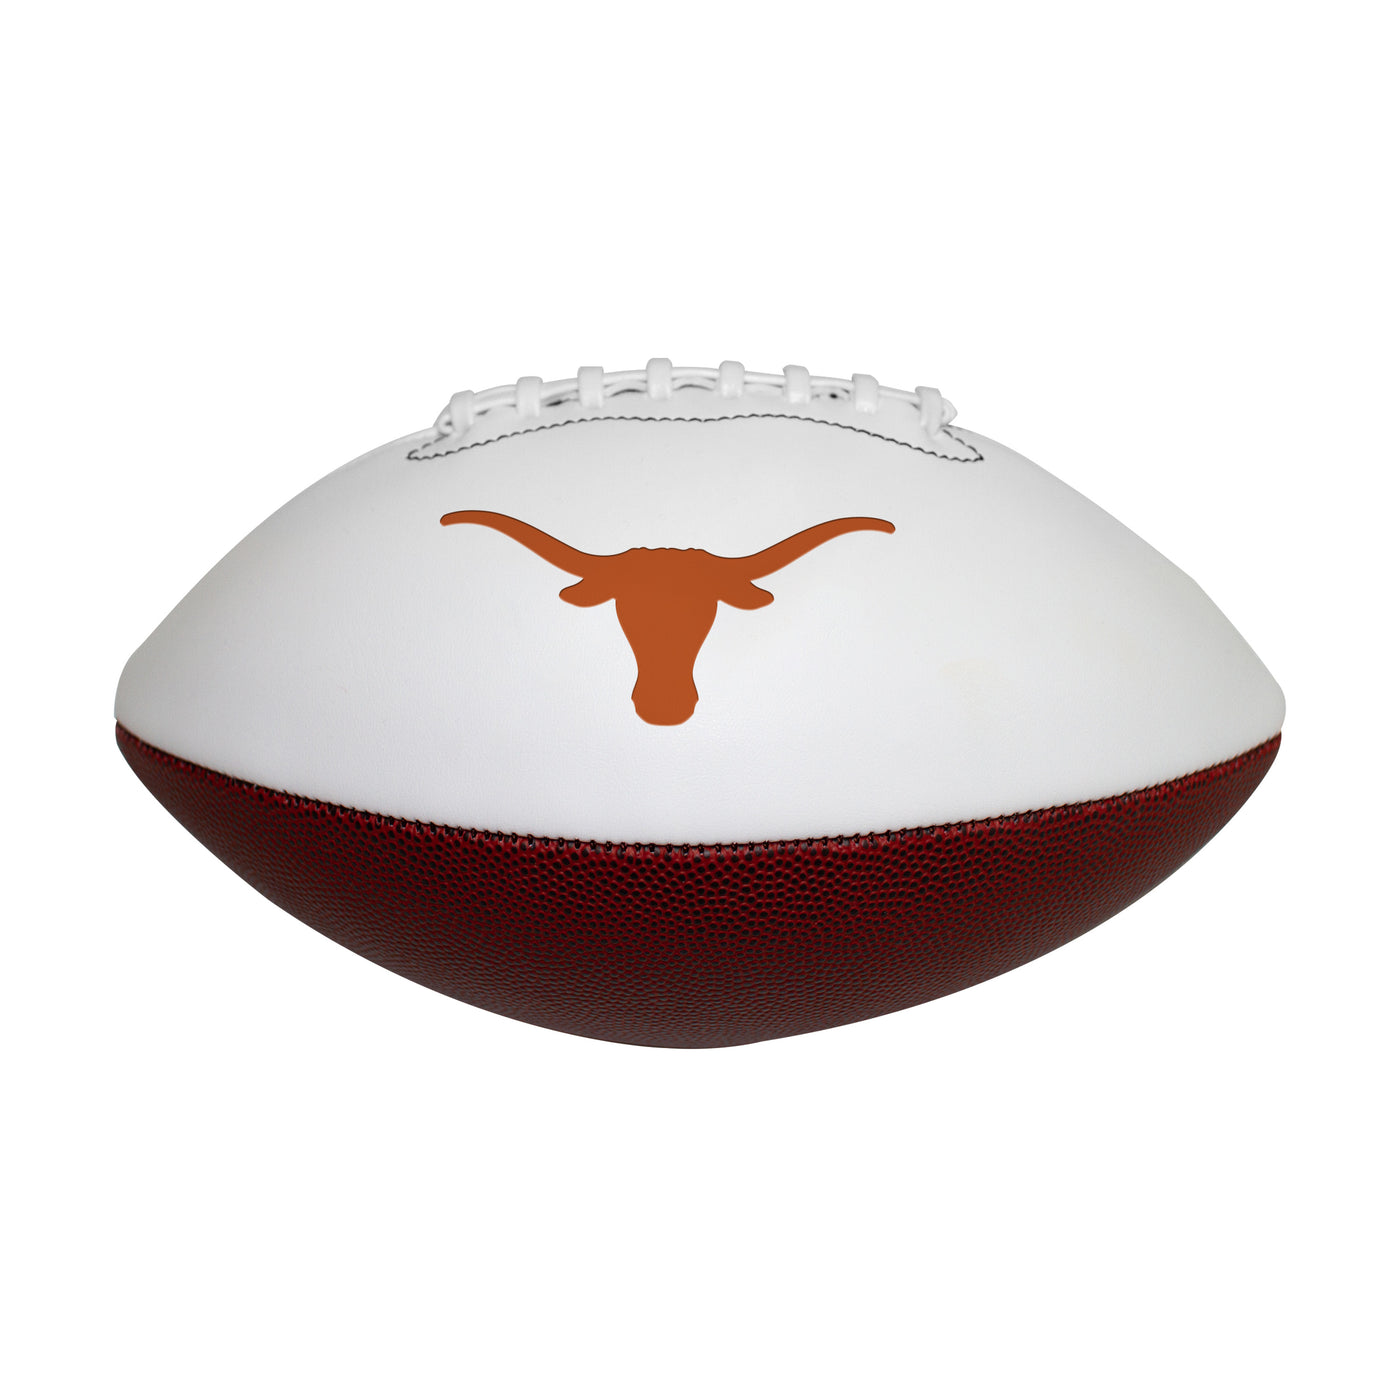 Texas Official-Size Autograph Football